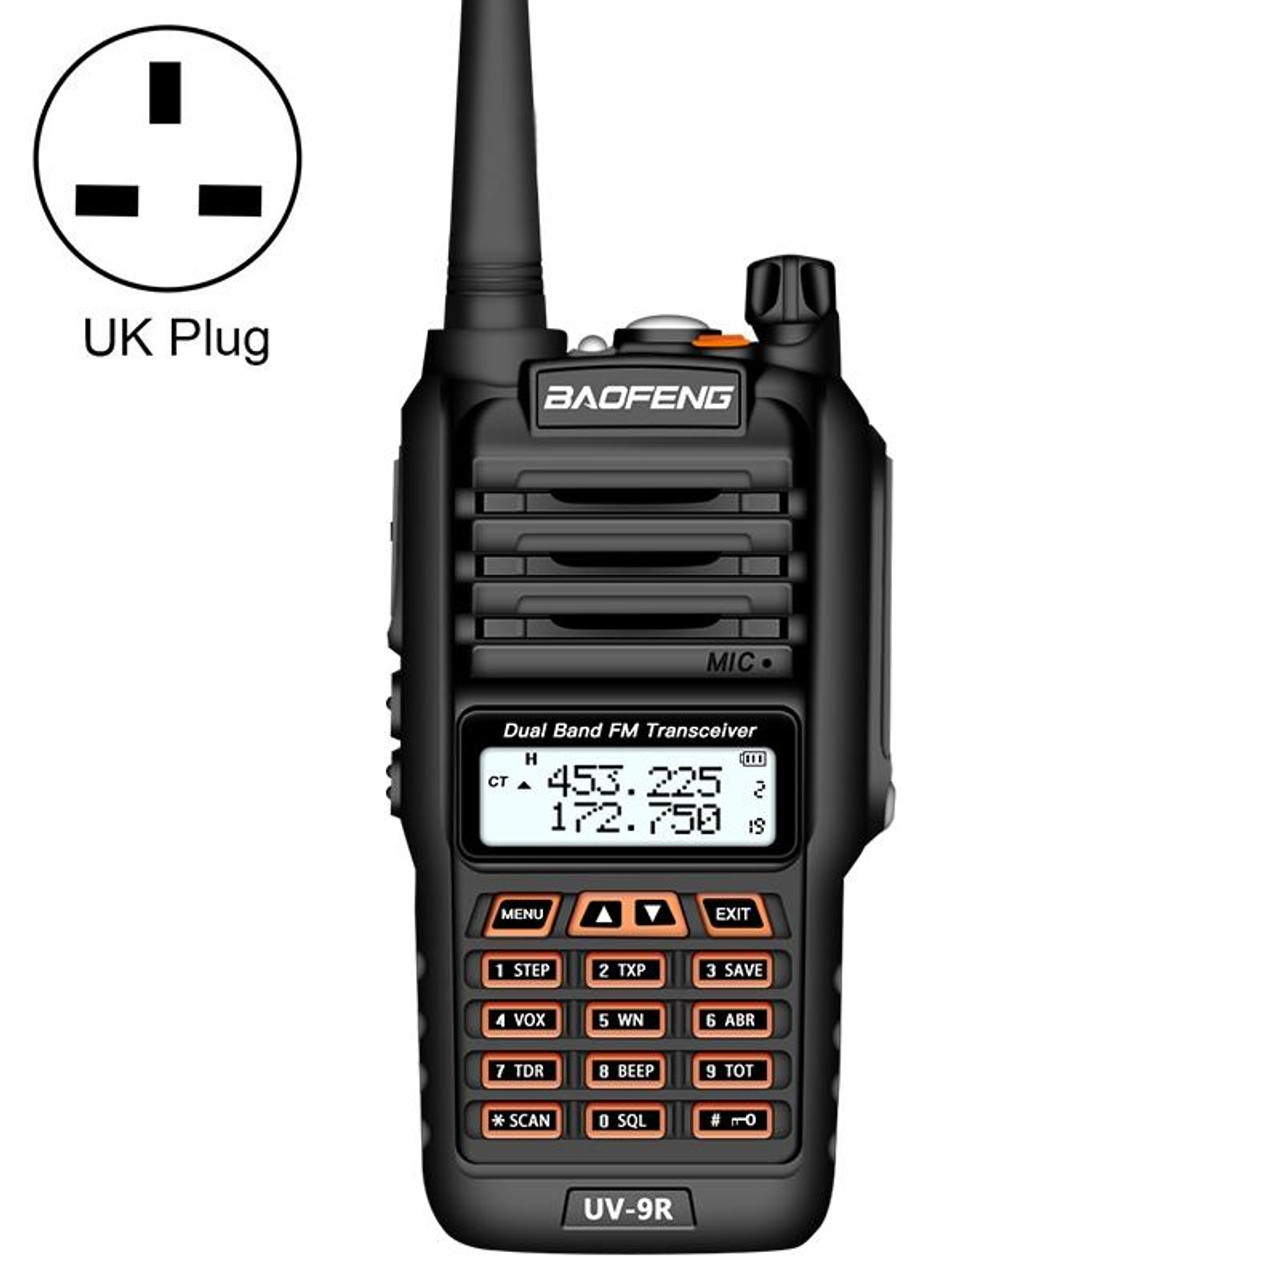 BaoFeng BF-UV9R 5W Waterproof Dual Band Radio Handheld Antenna Walkie Talkie,  UK Plug, snatcher